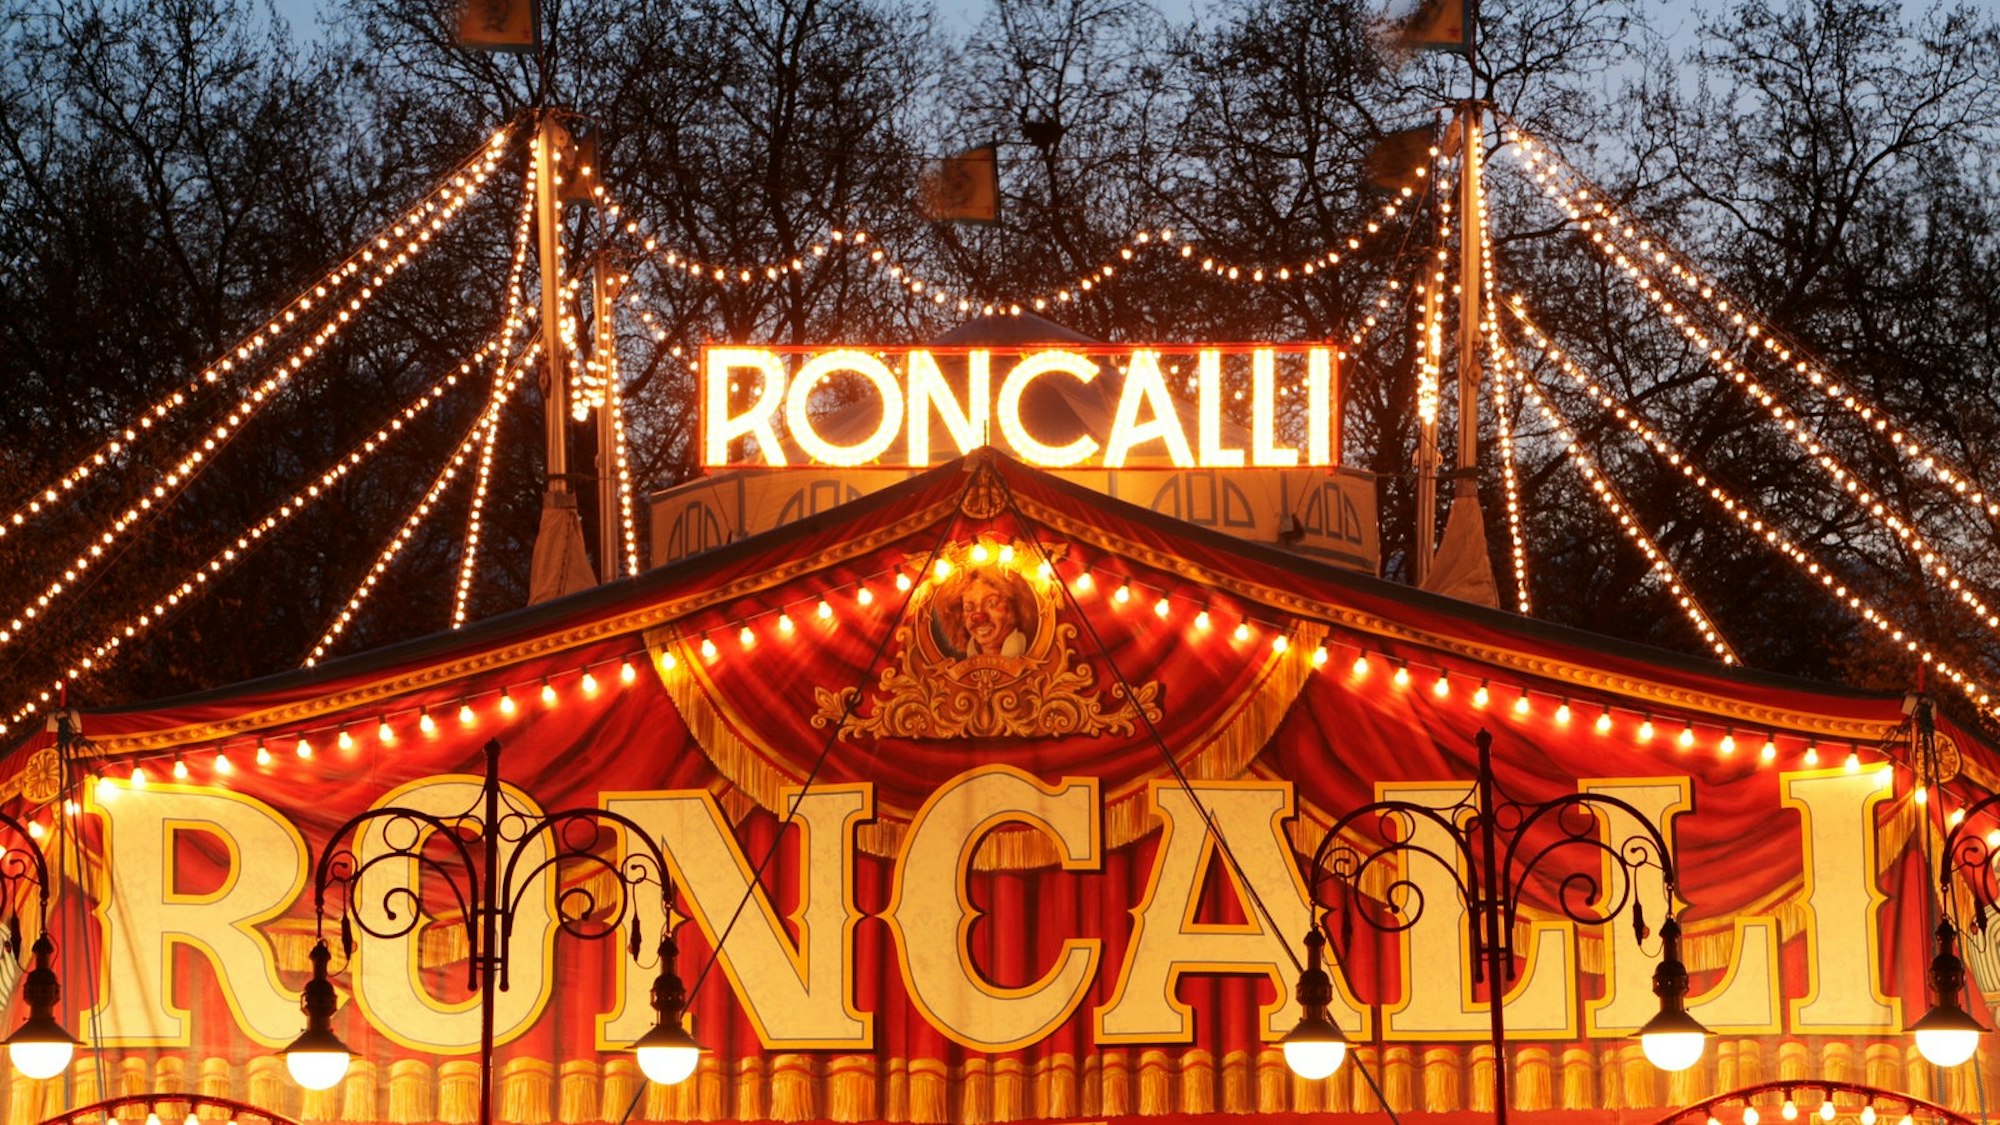 2) Circus-Theater Roncalli